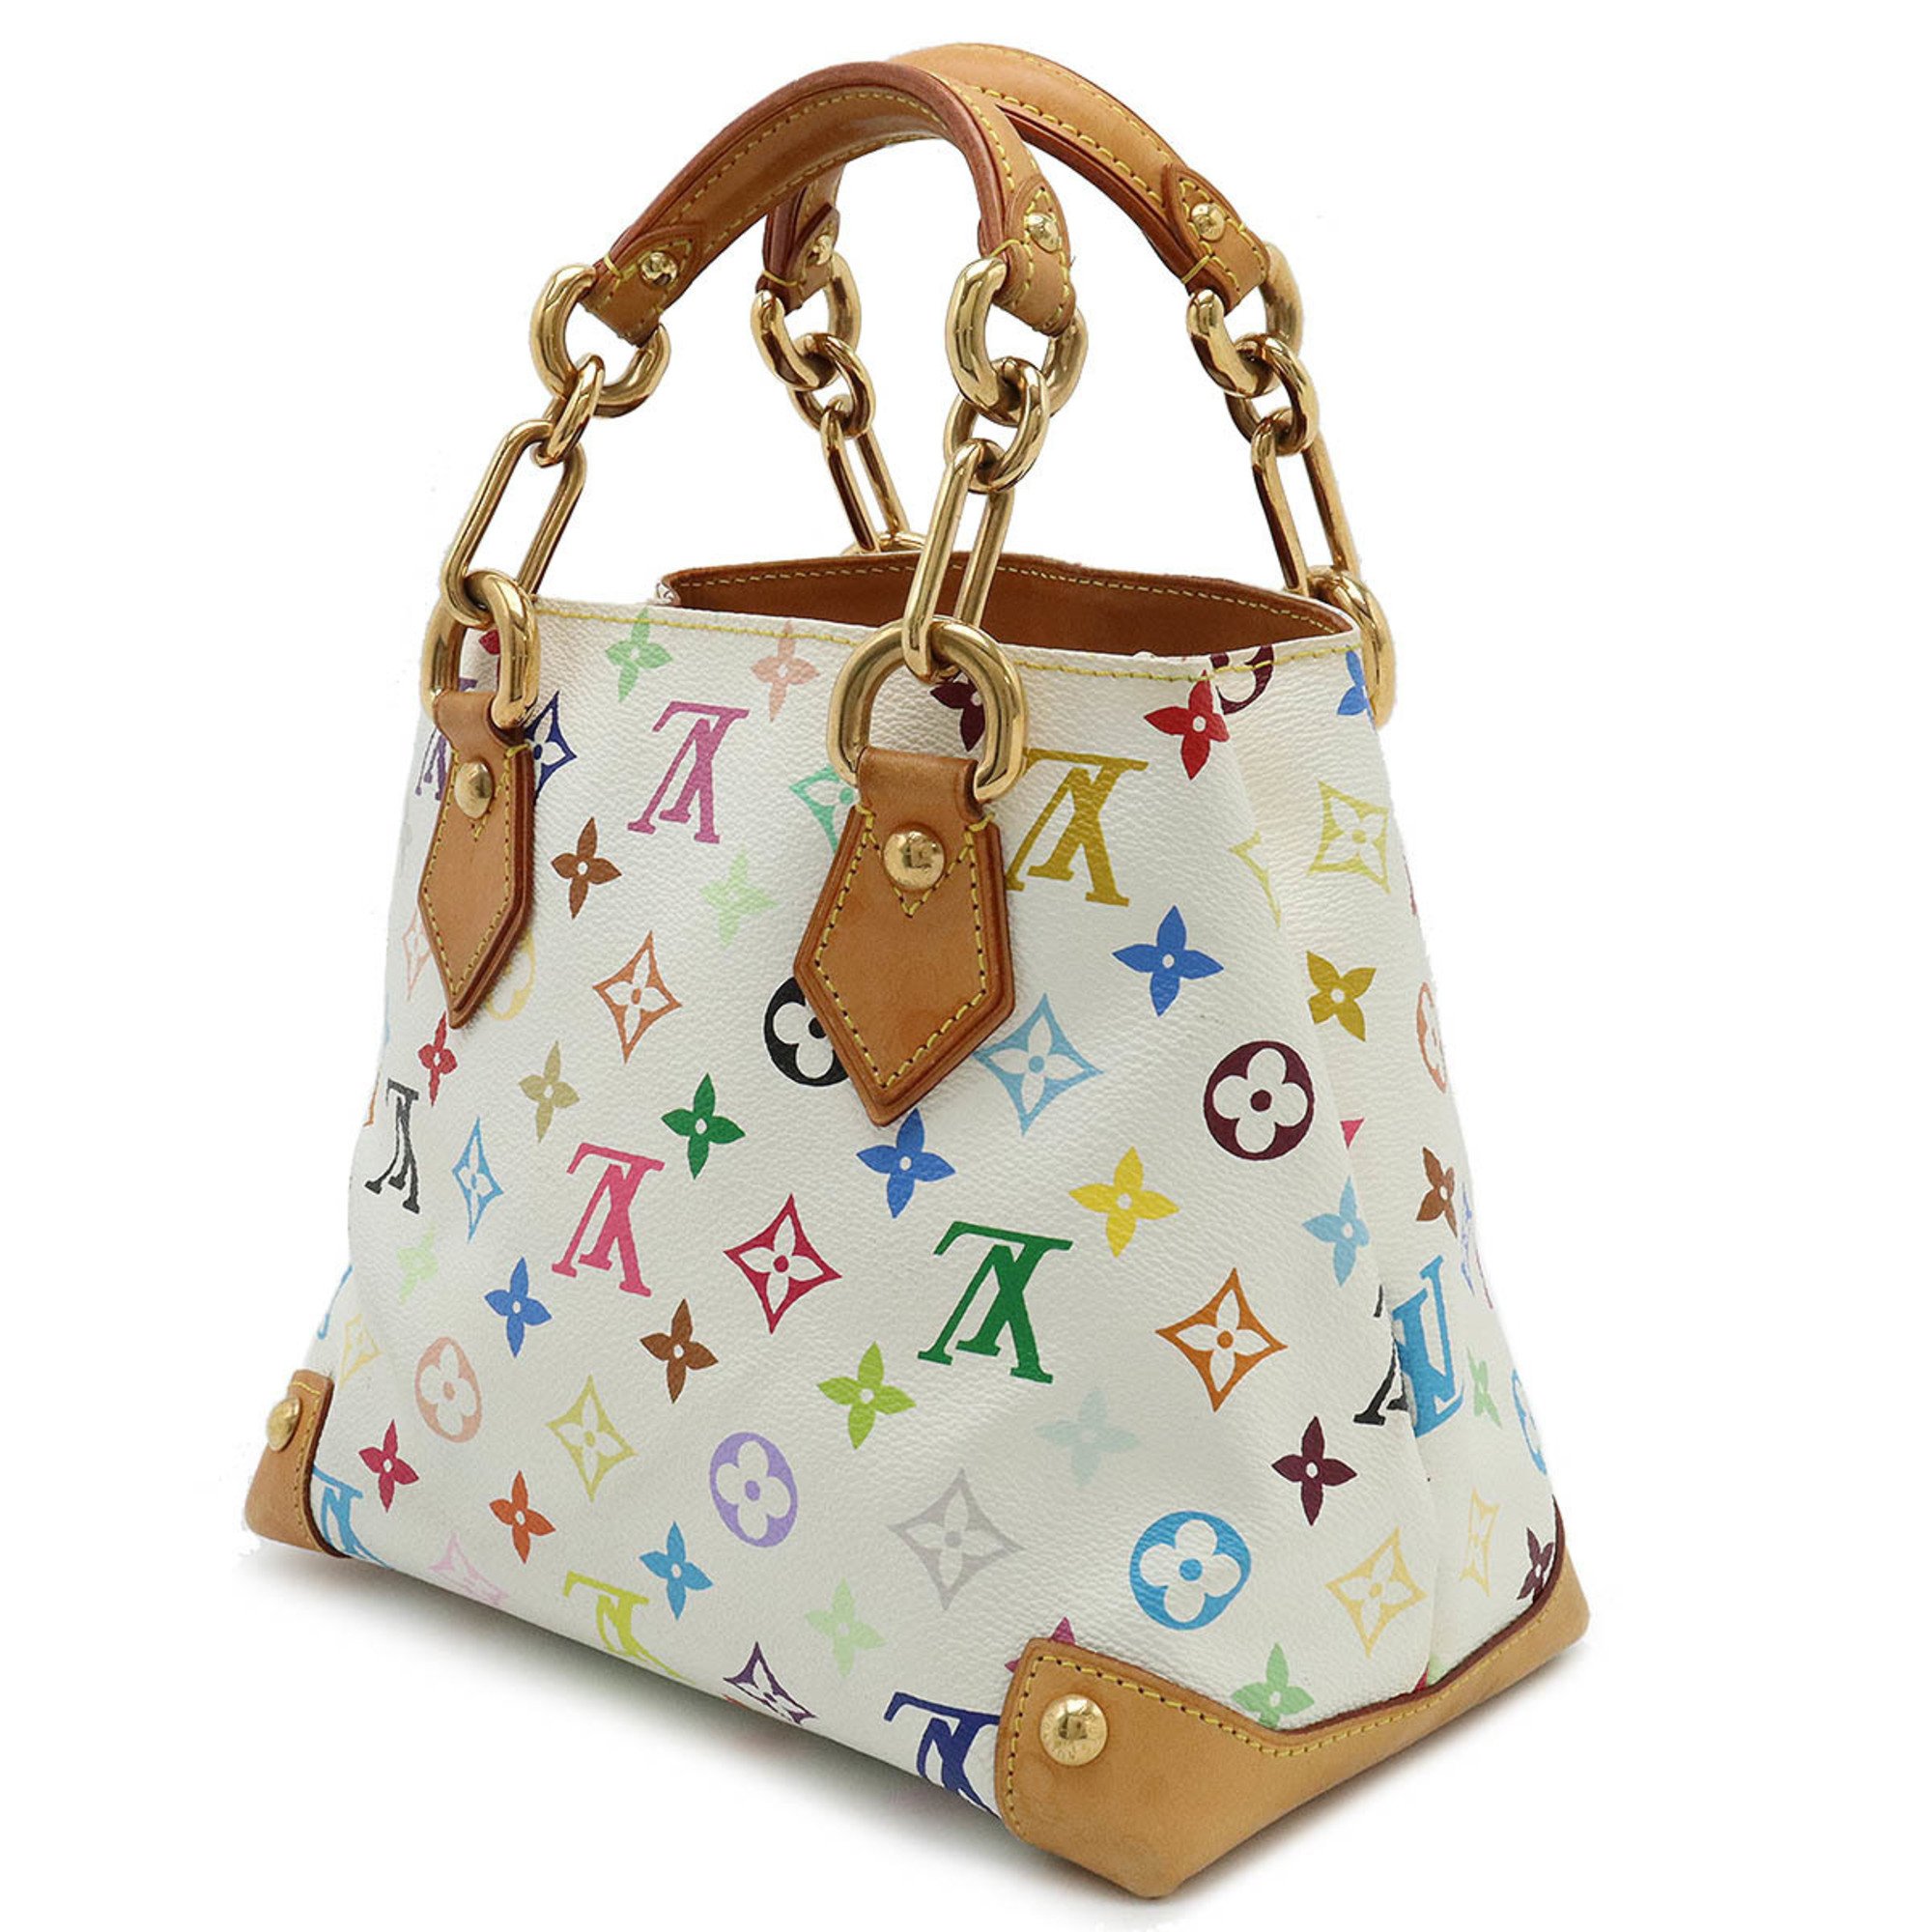 LOUIS VUITTON Louis Vuitton Monogram Multicolor Audra Handbag Tote Bag Chain Blanc White M40047